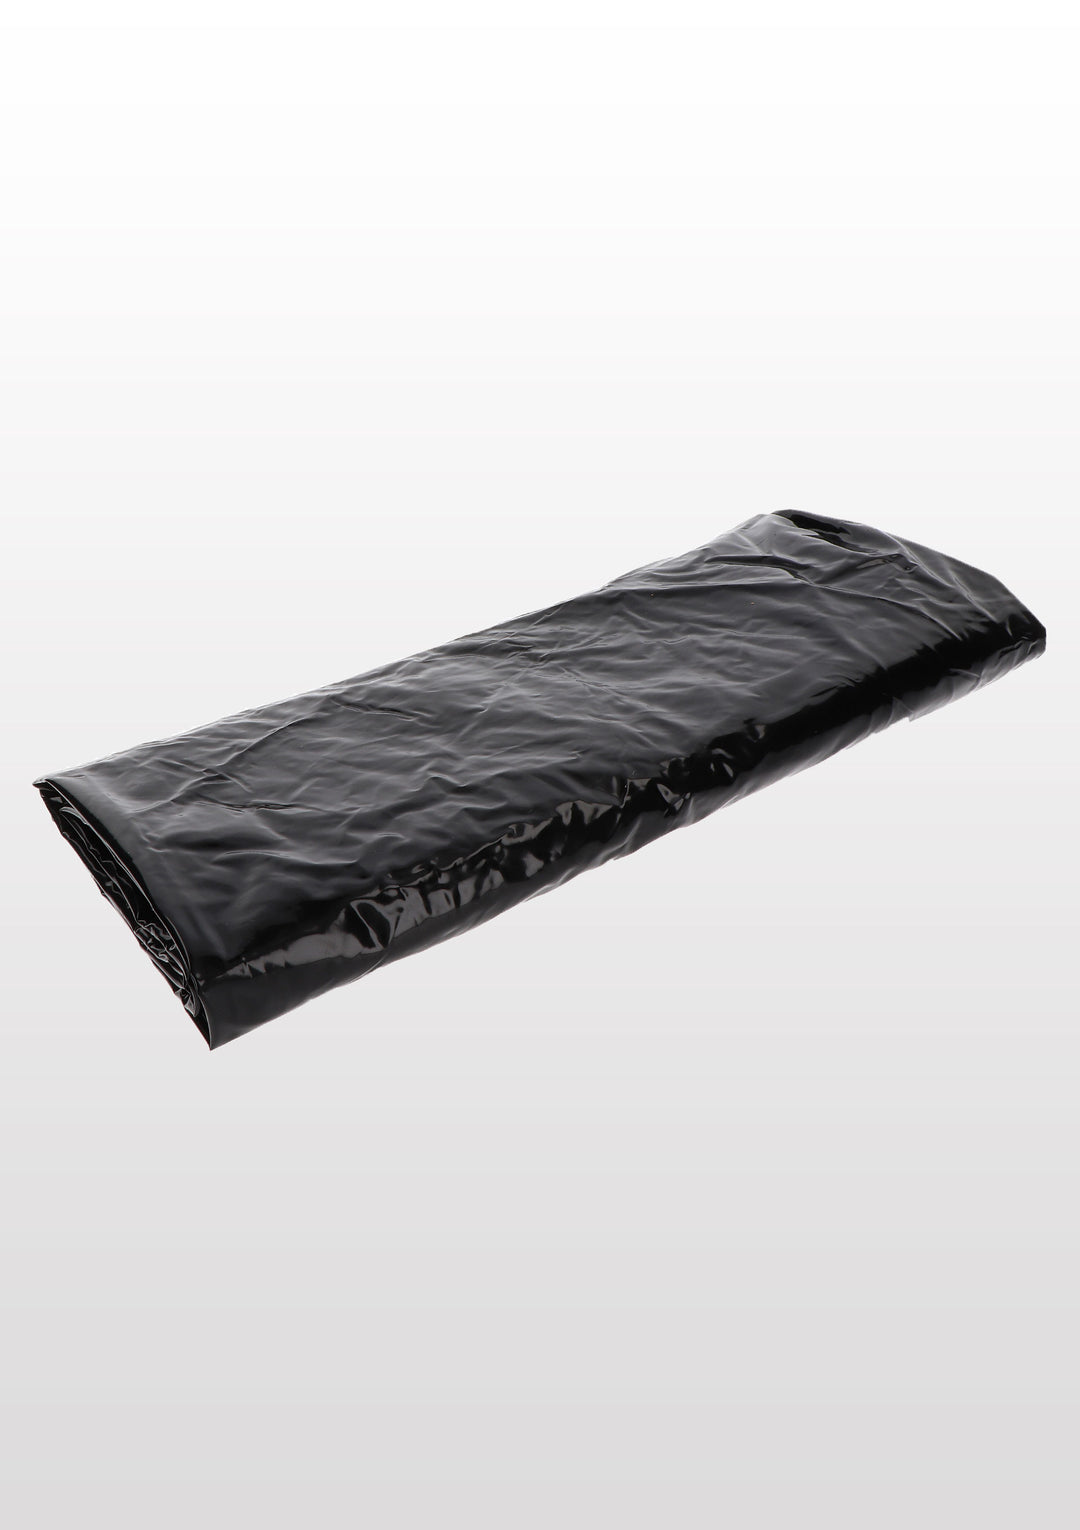 Black Waterproof Wet Play King Size Bedsheet